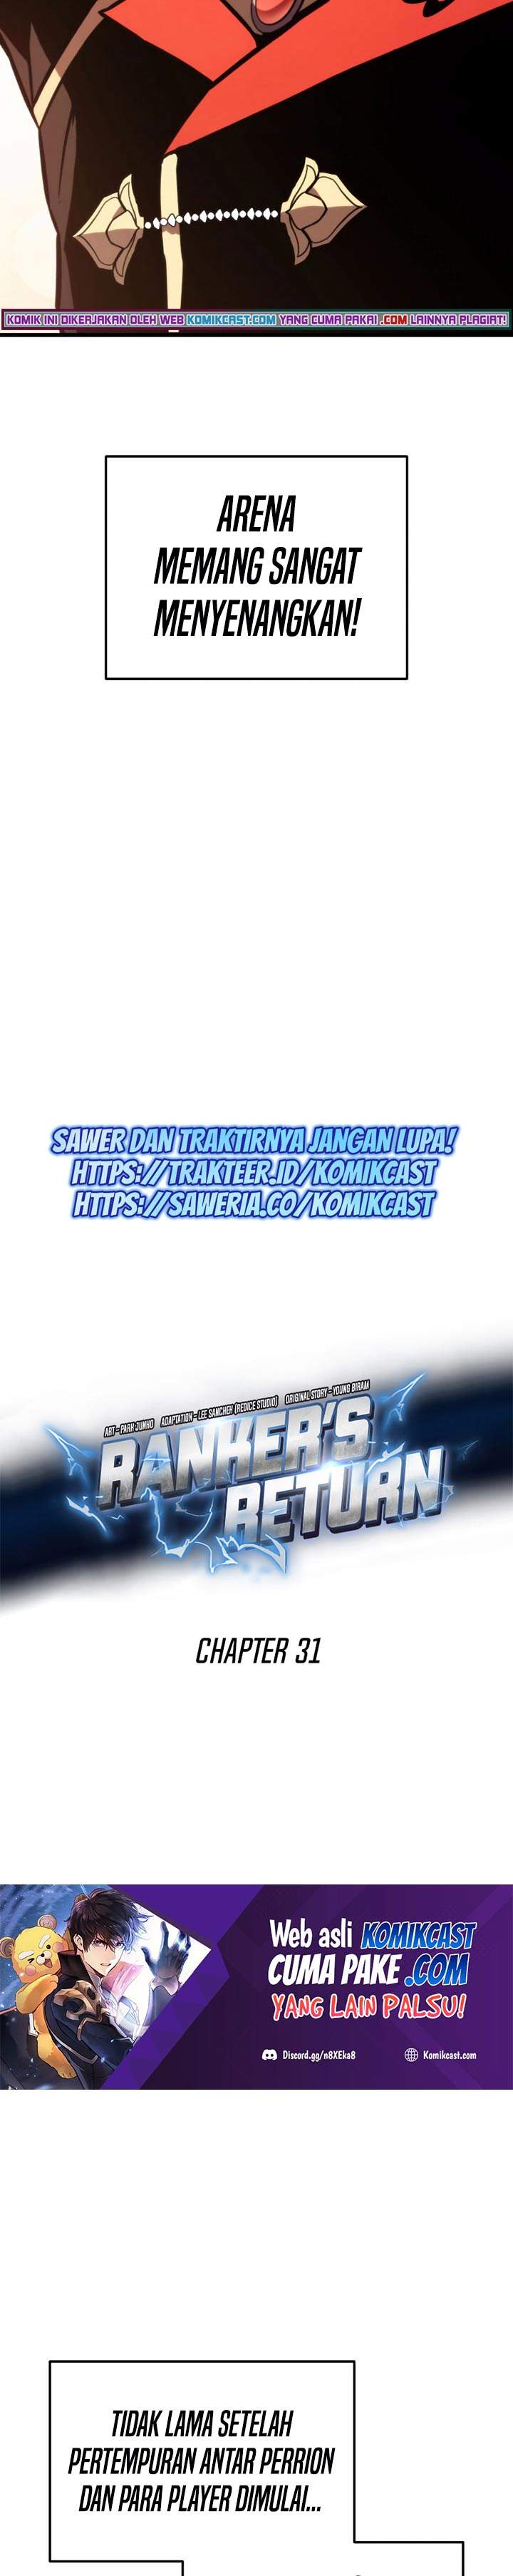 Ranker’s Return (Remake) Chapter 31